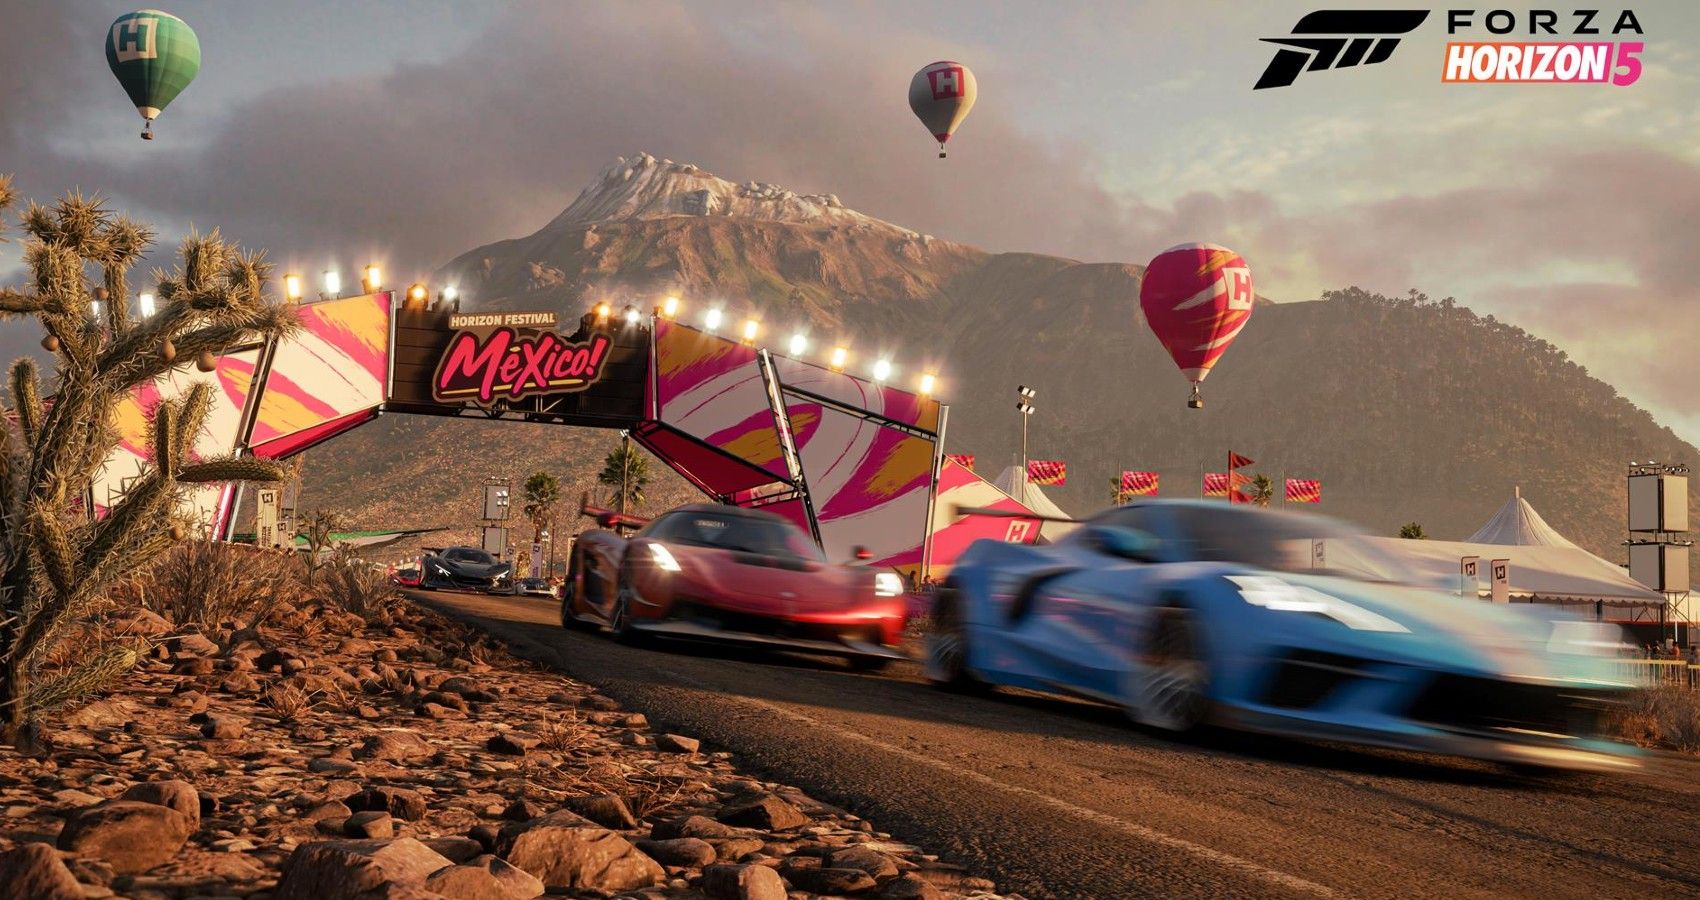 Forza Horizon 5 cars in action